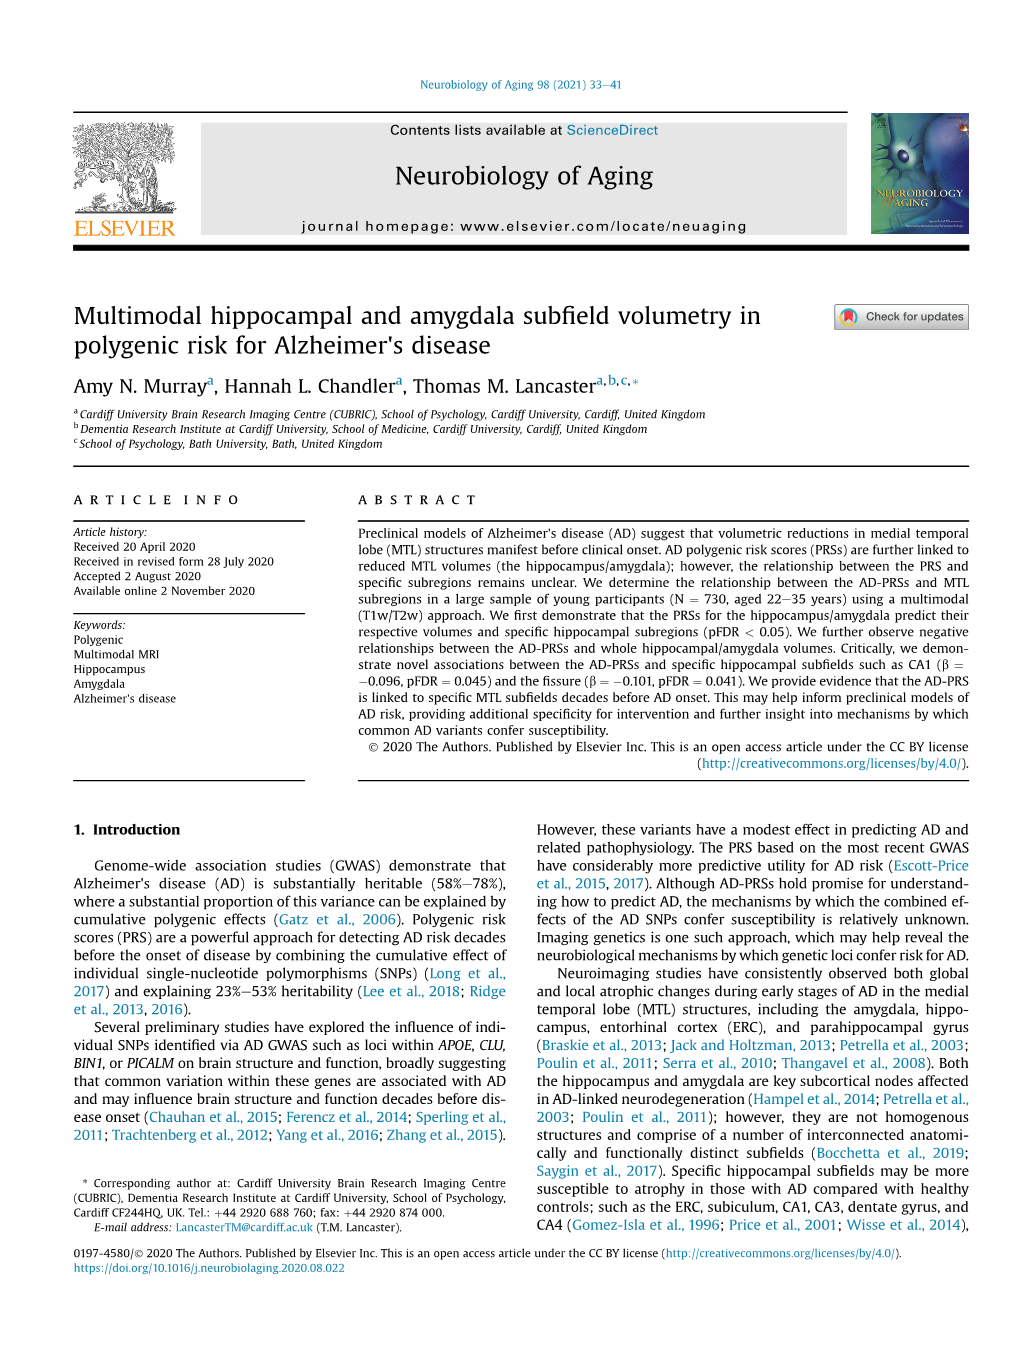 Multimodal Hippocampal and Amygdala Subfield Volumetry in Polygenic Risk for Alzheimer's Disease